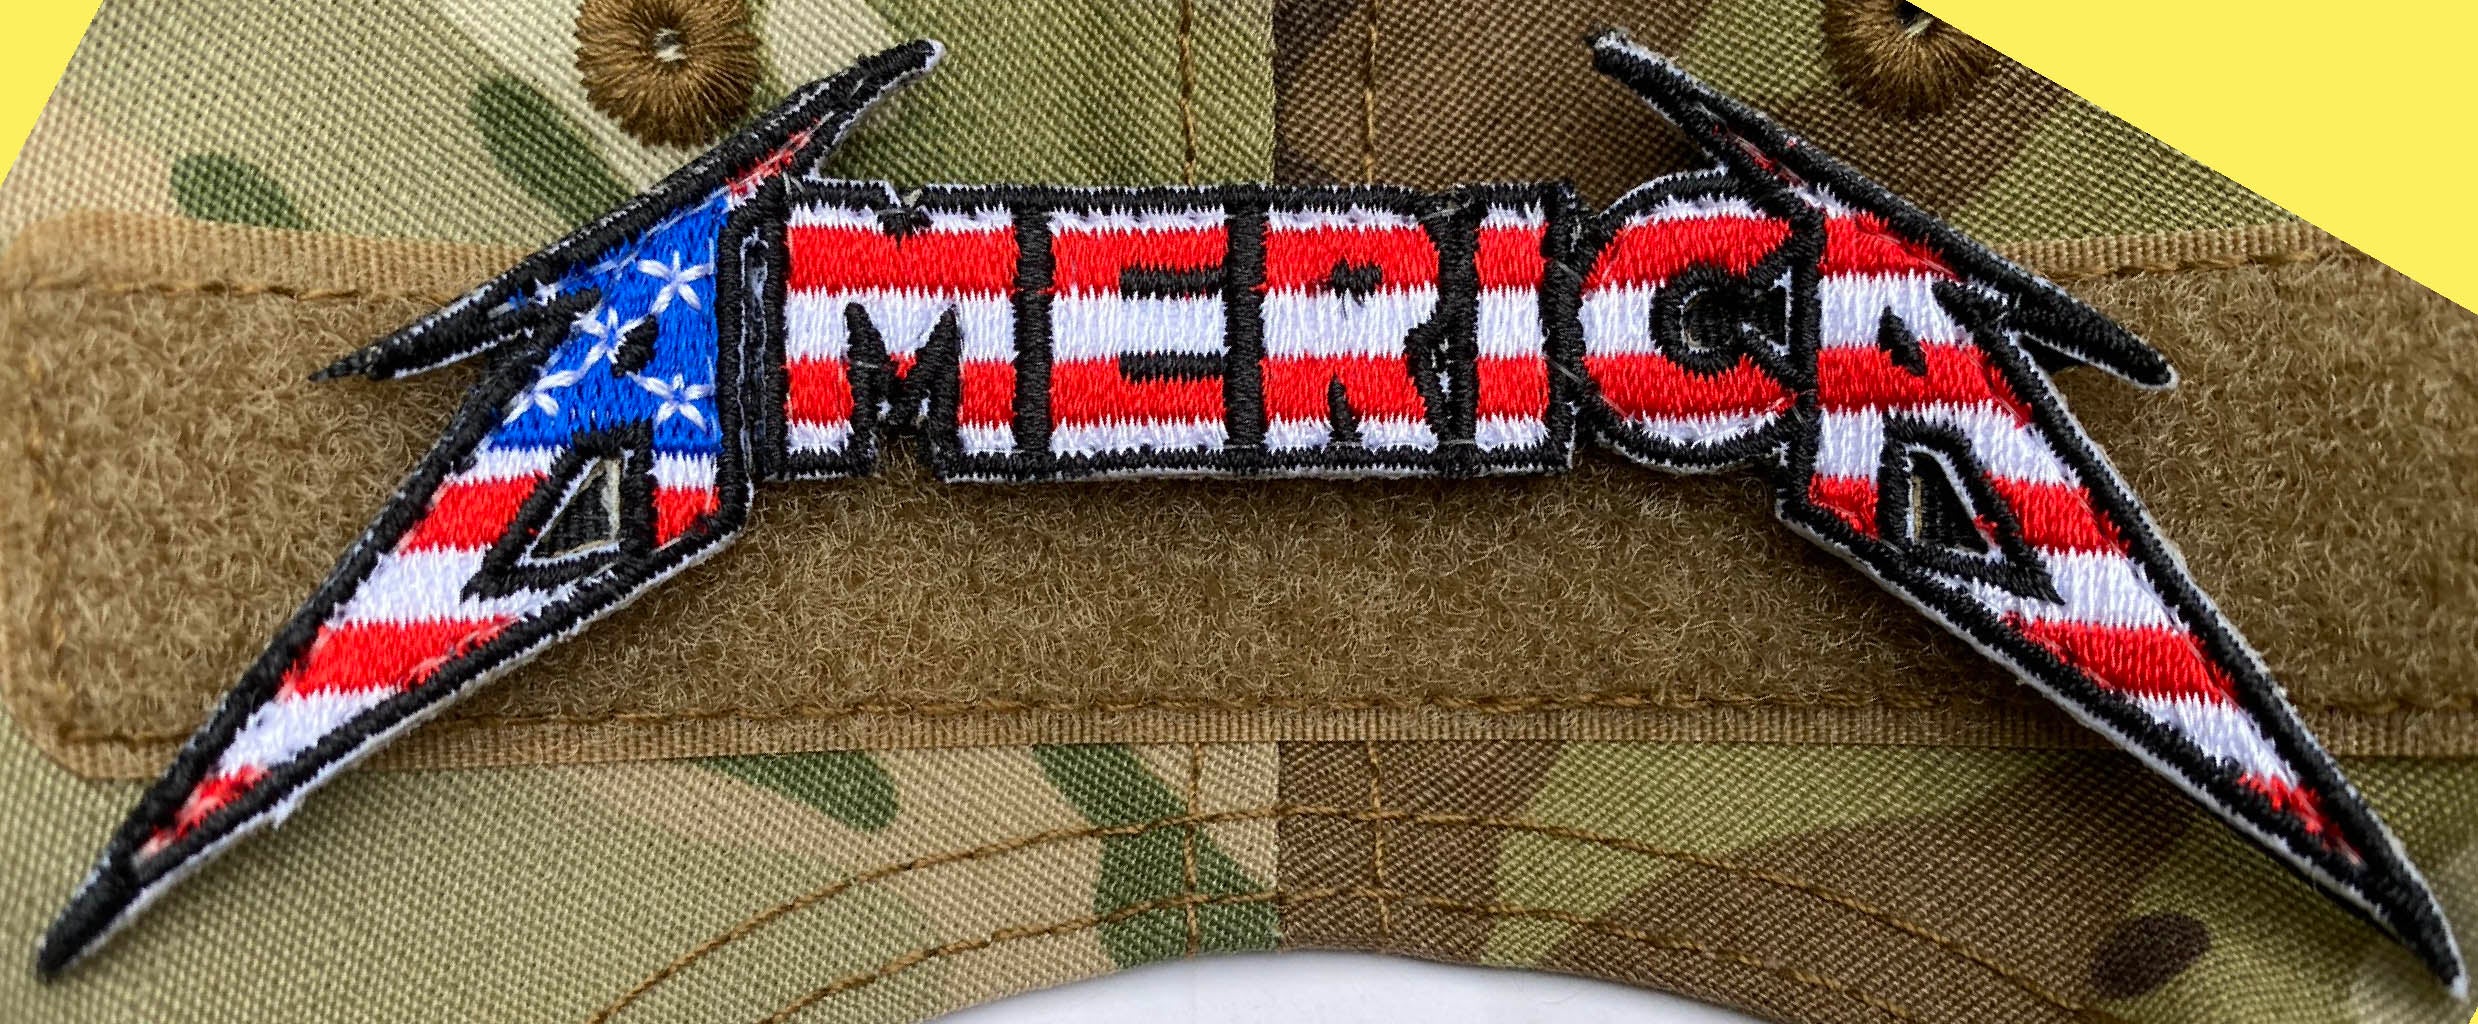 AMERICA Rocks Tactical Morale Patch